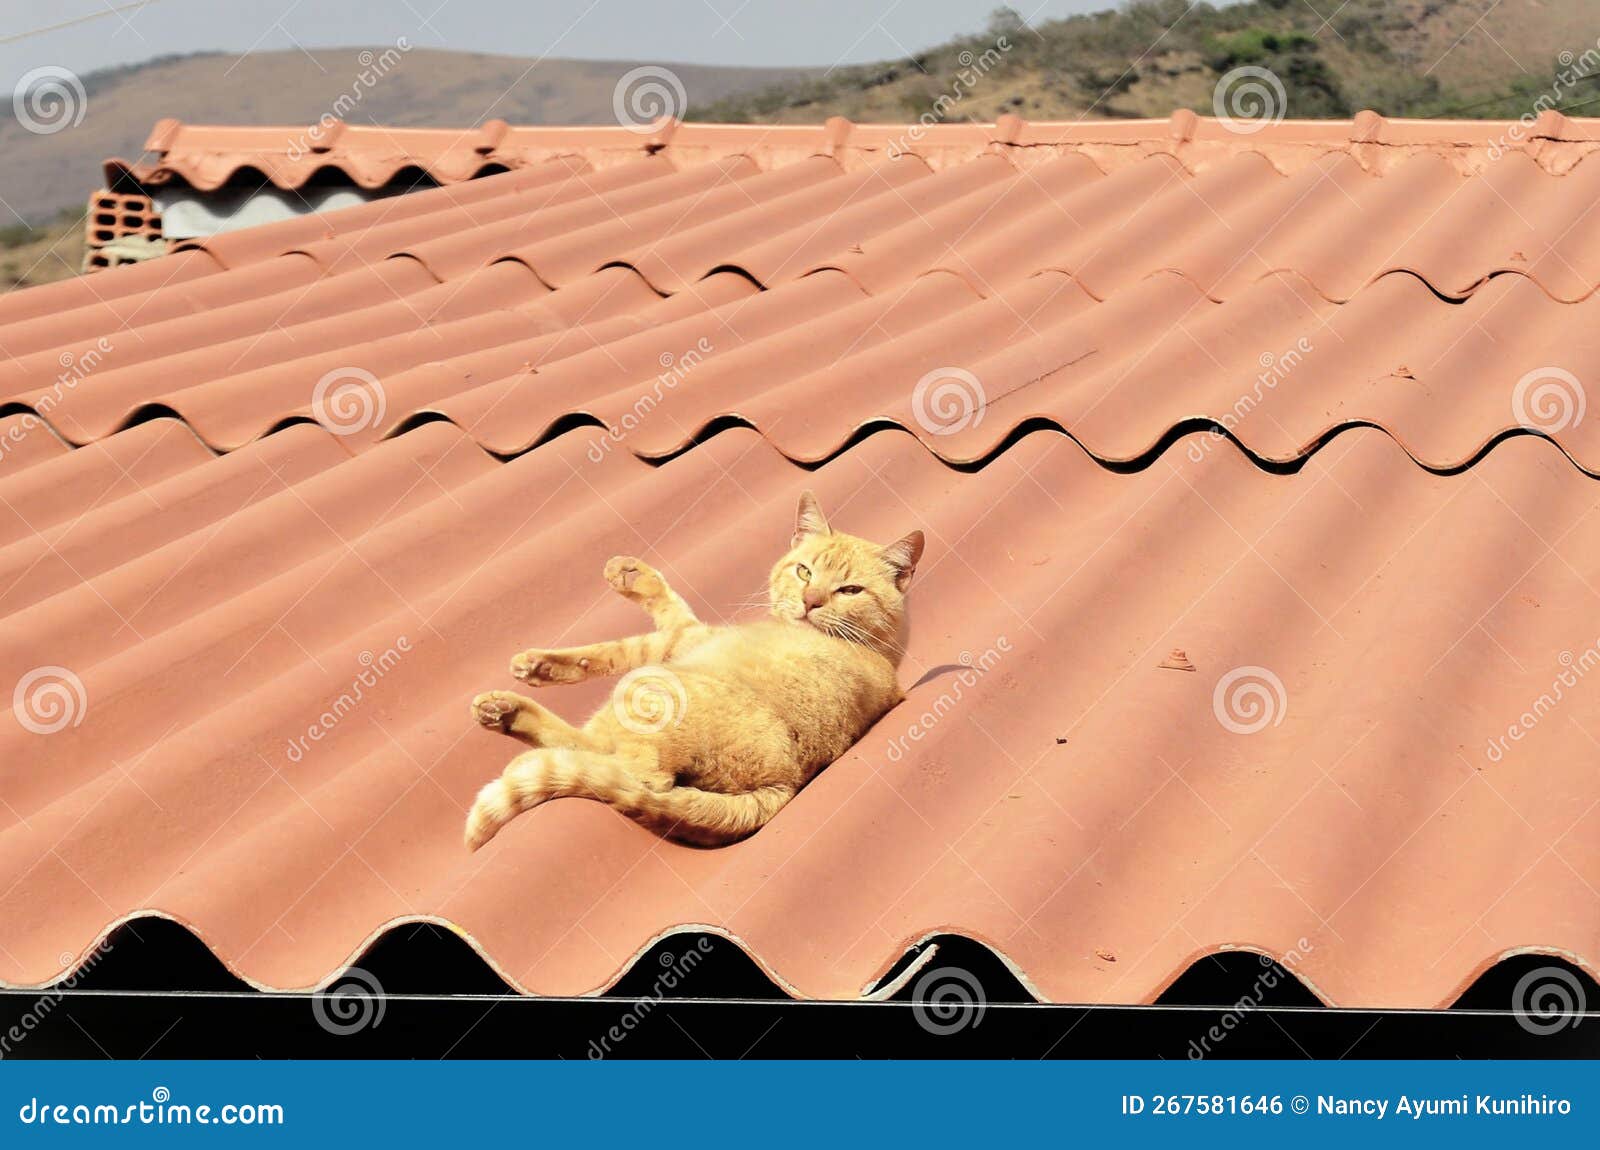 orange felis catus cat charm lying on the roof